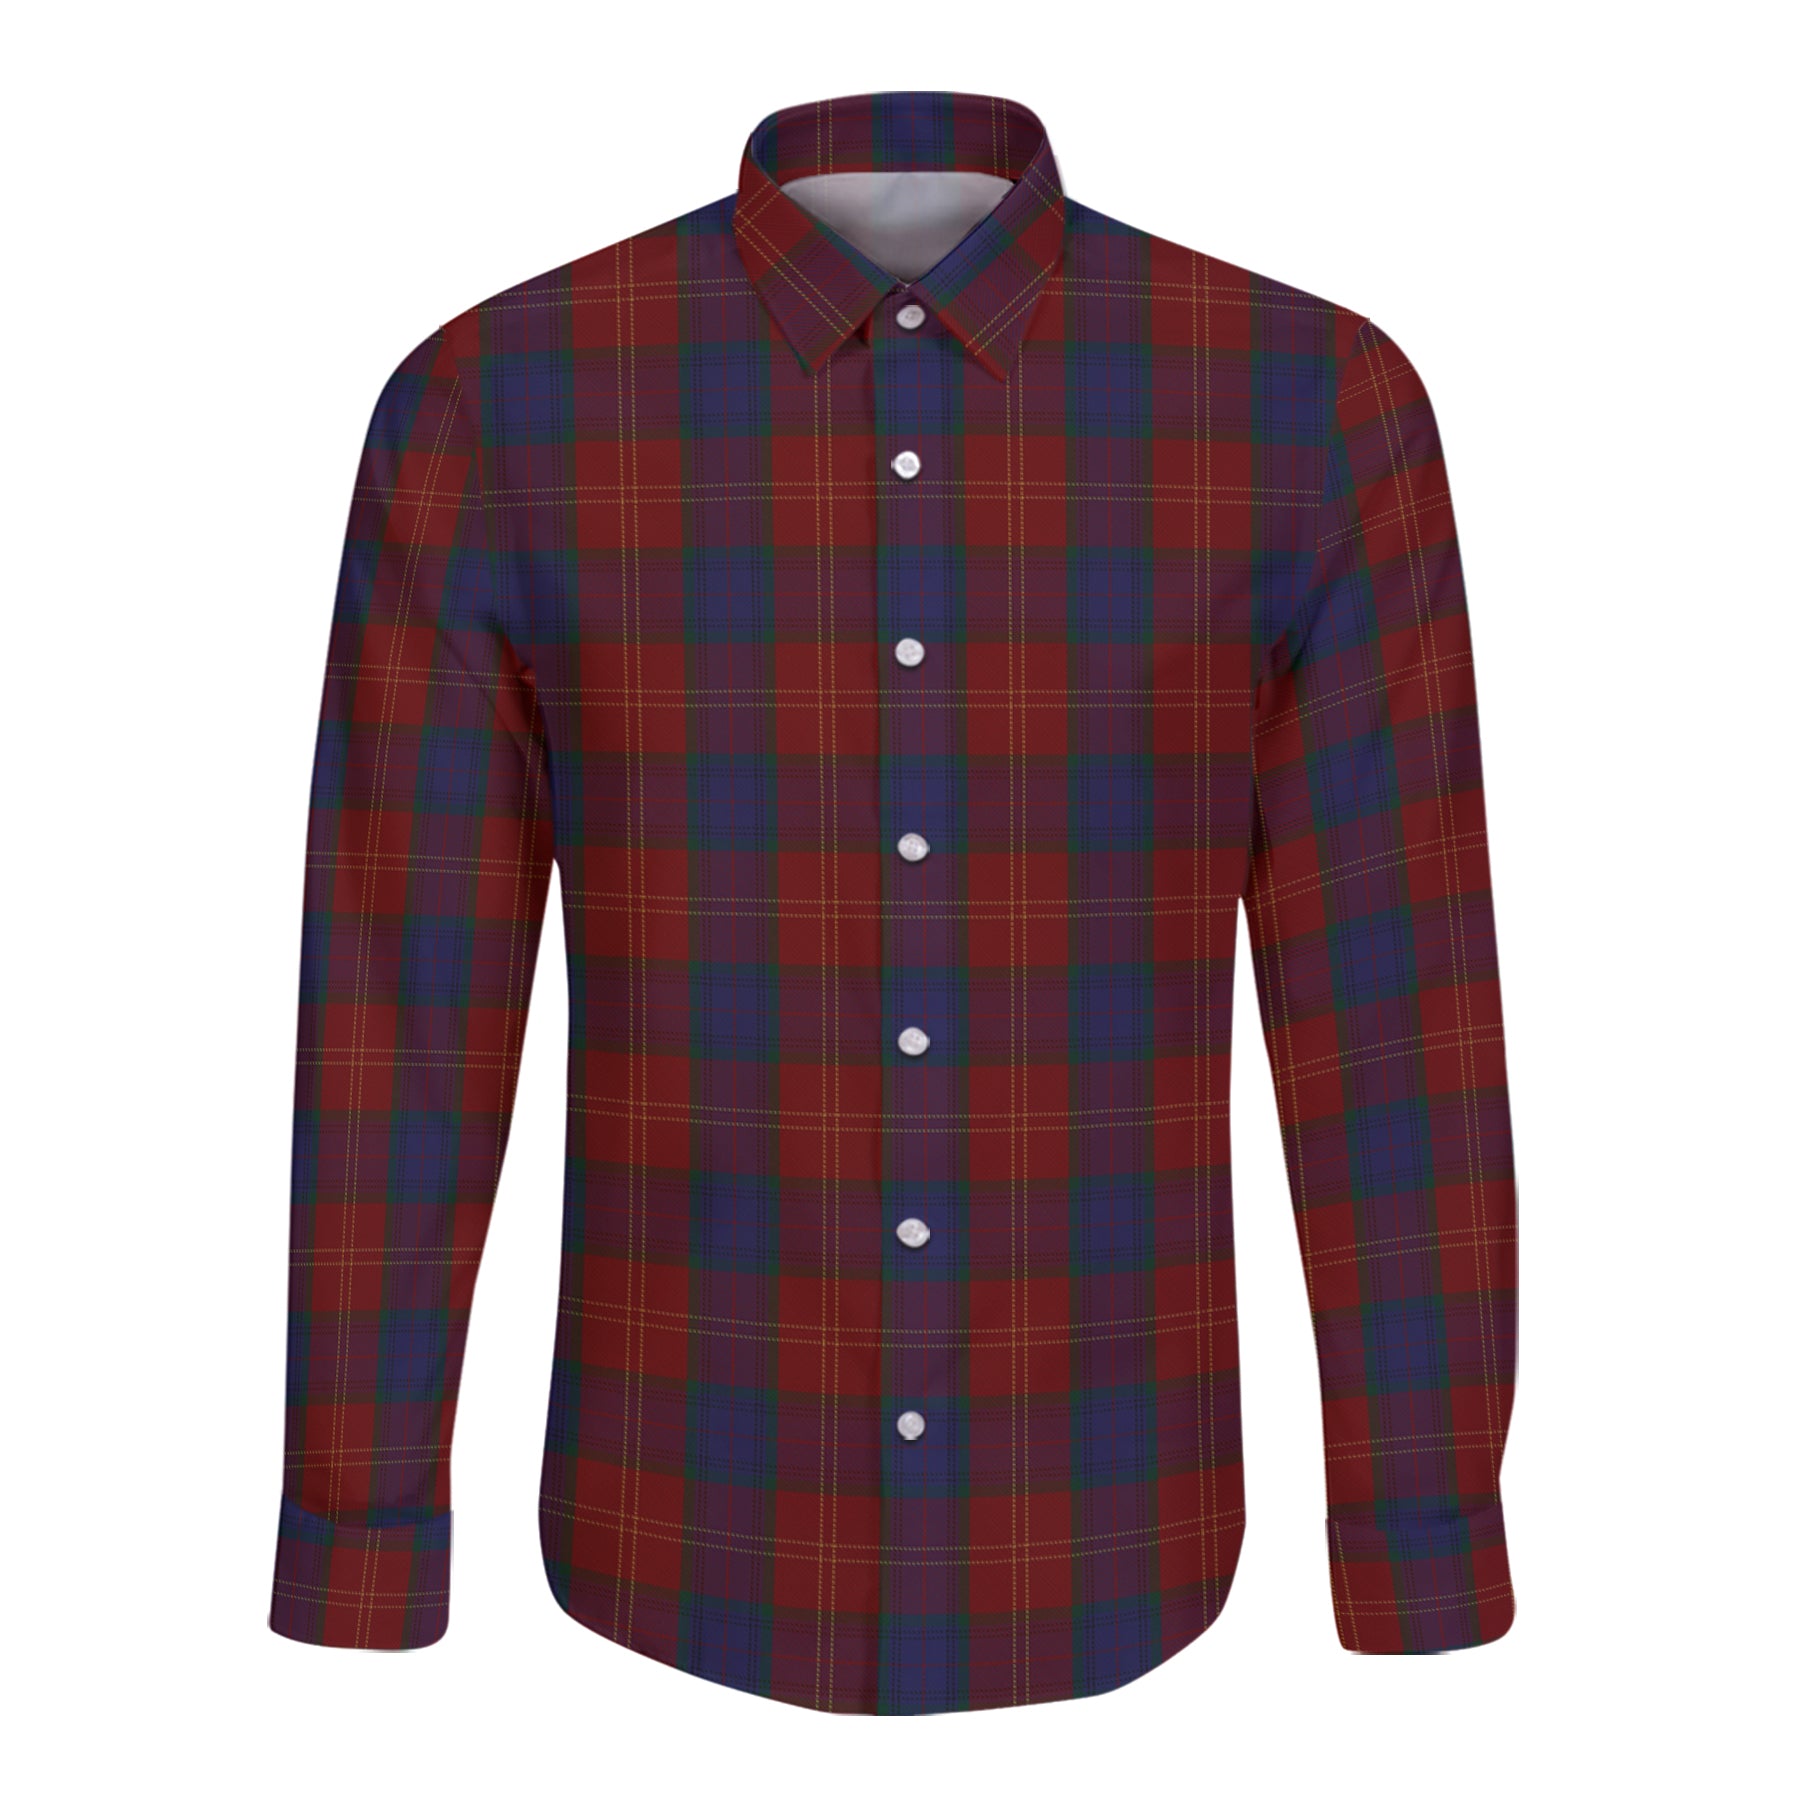 Macedward Tartan Long Sleeve Button Up Shirt K23